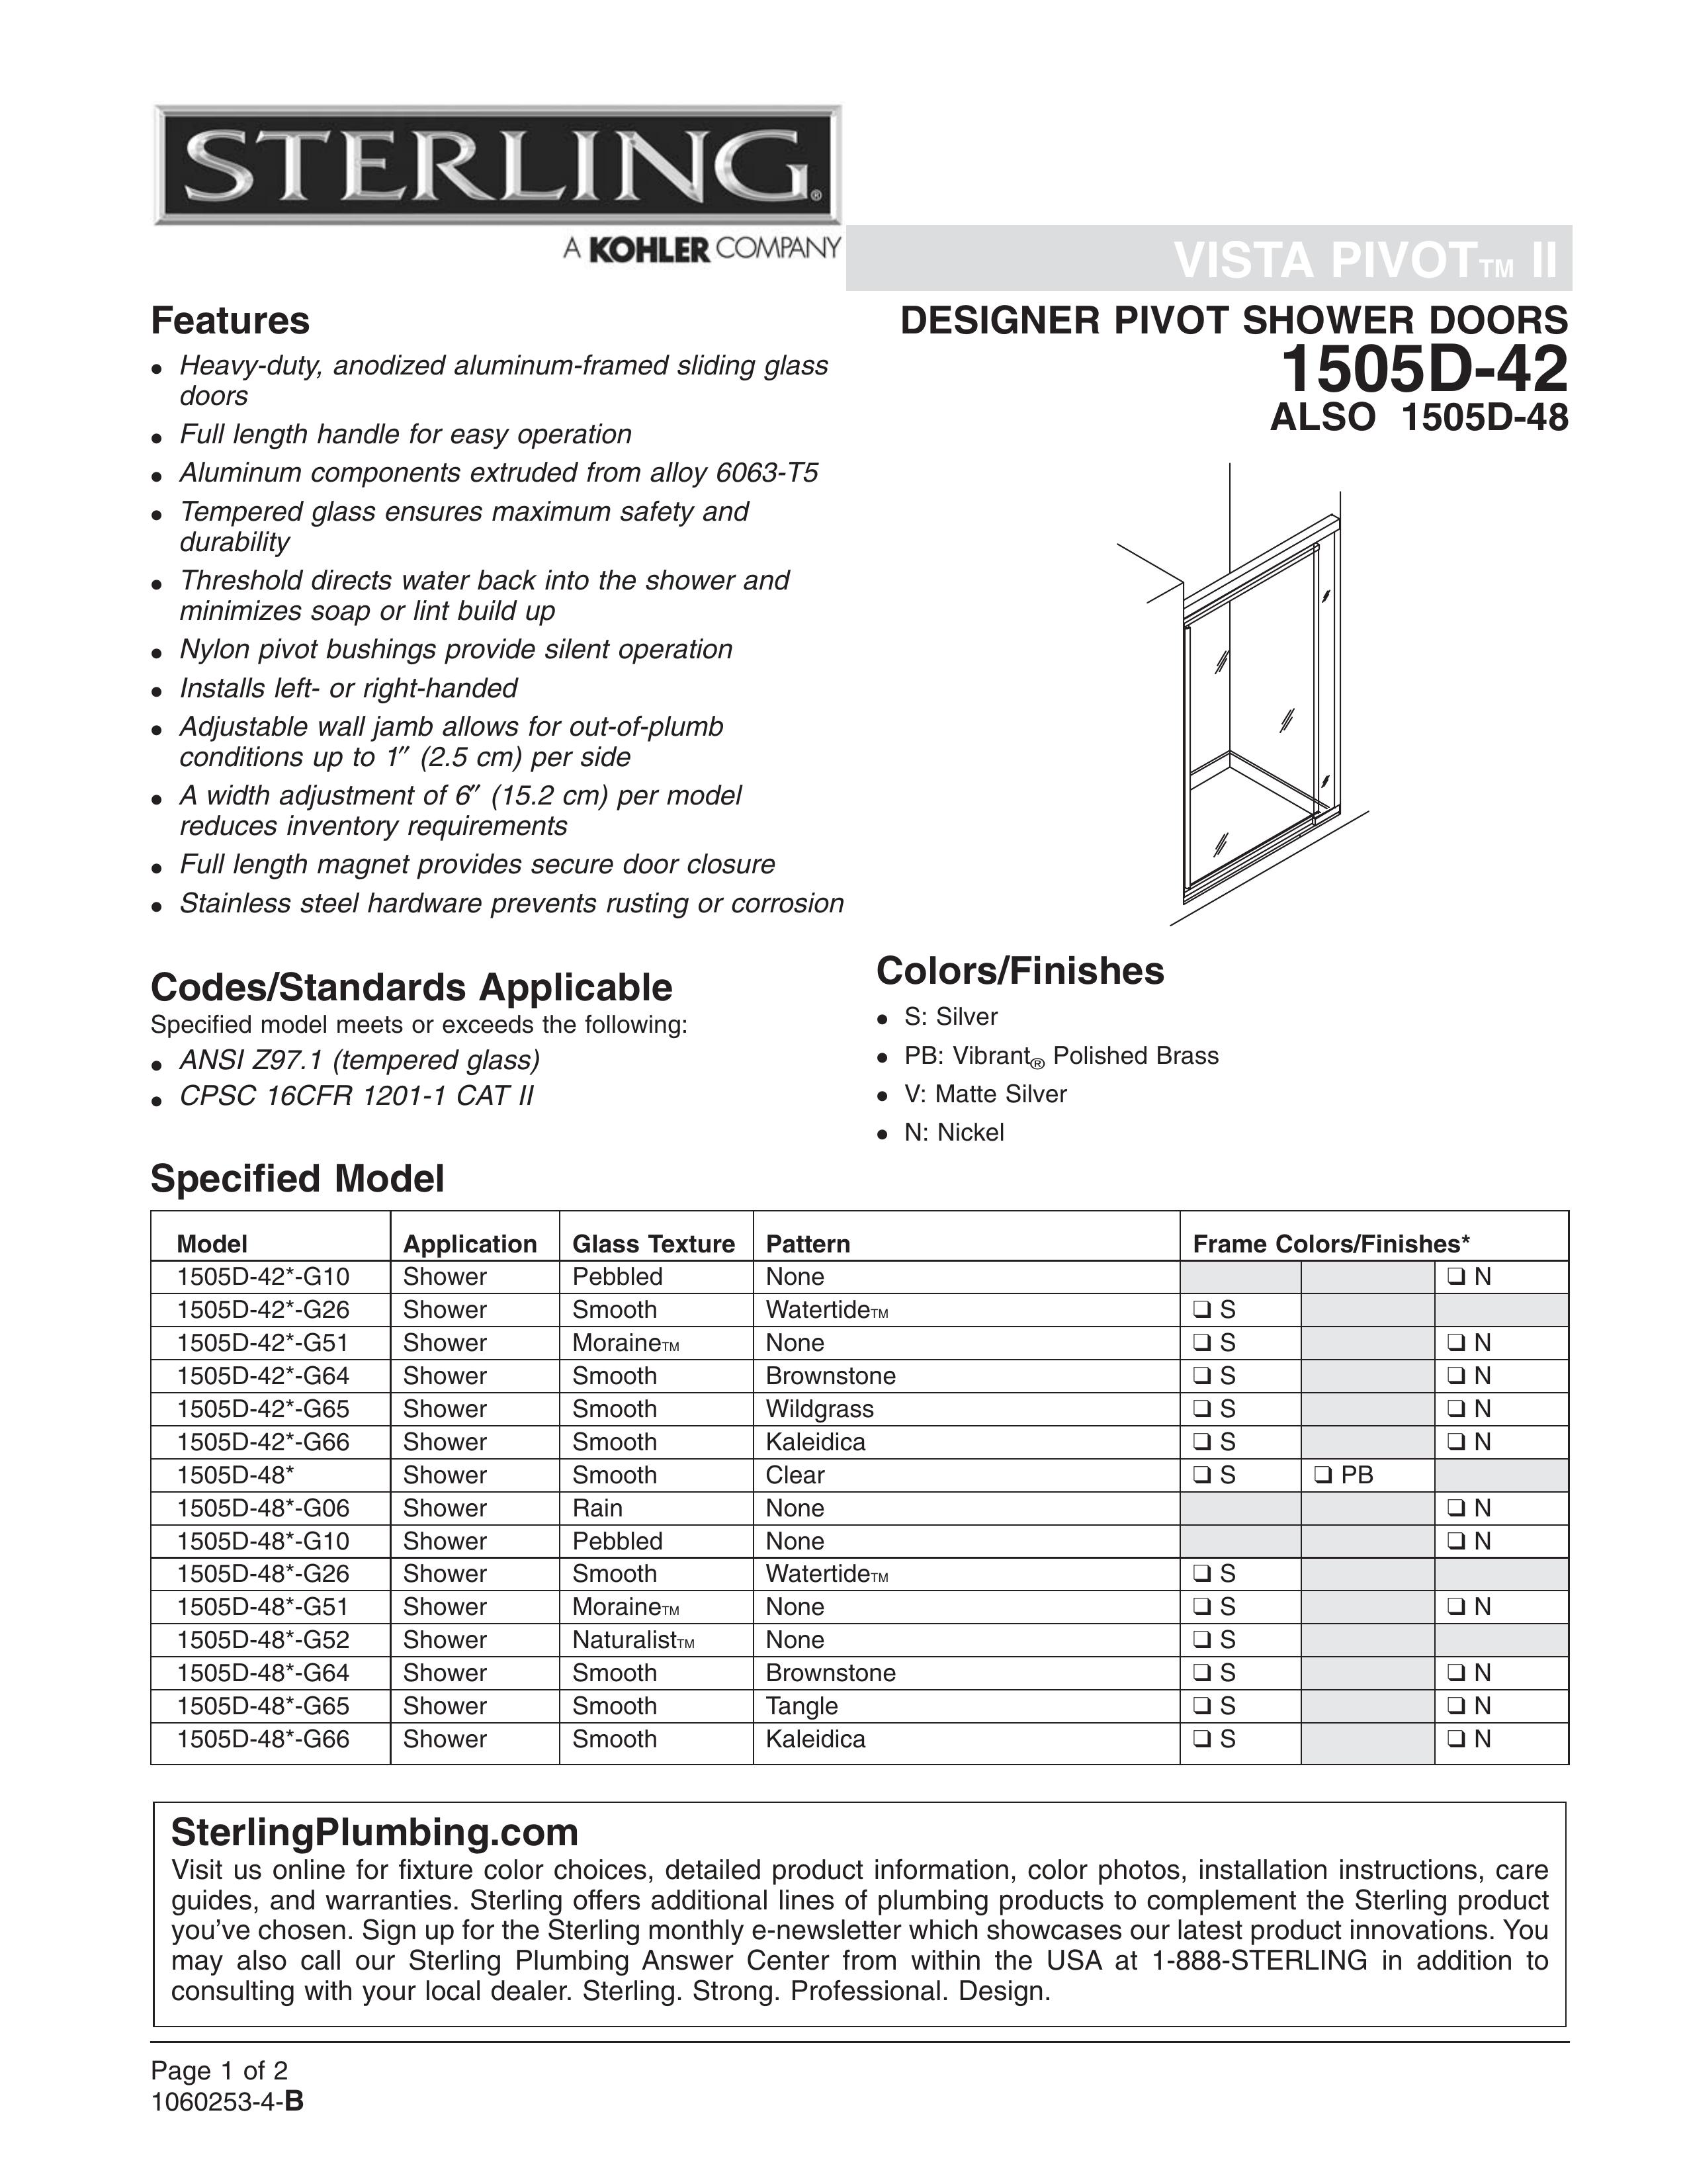 Sterling Plumbing 1505D-42 Outdoor Shower User Manual